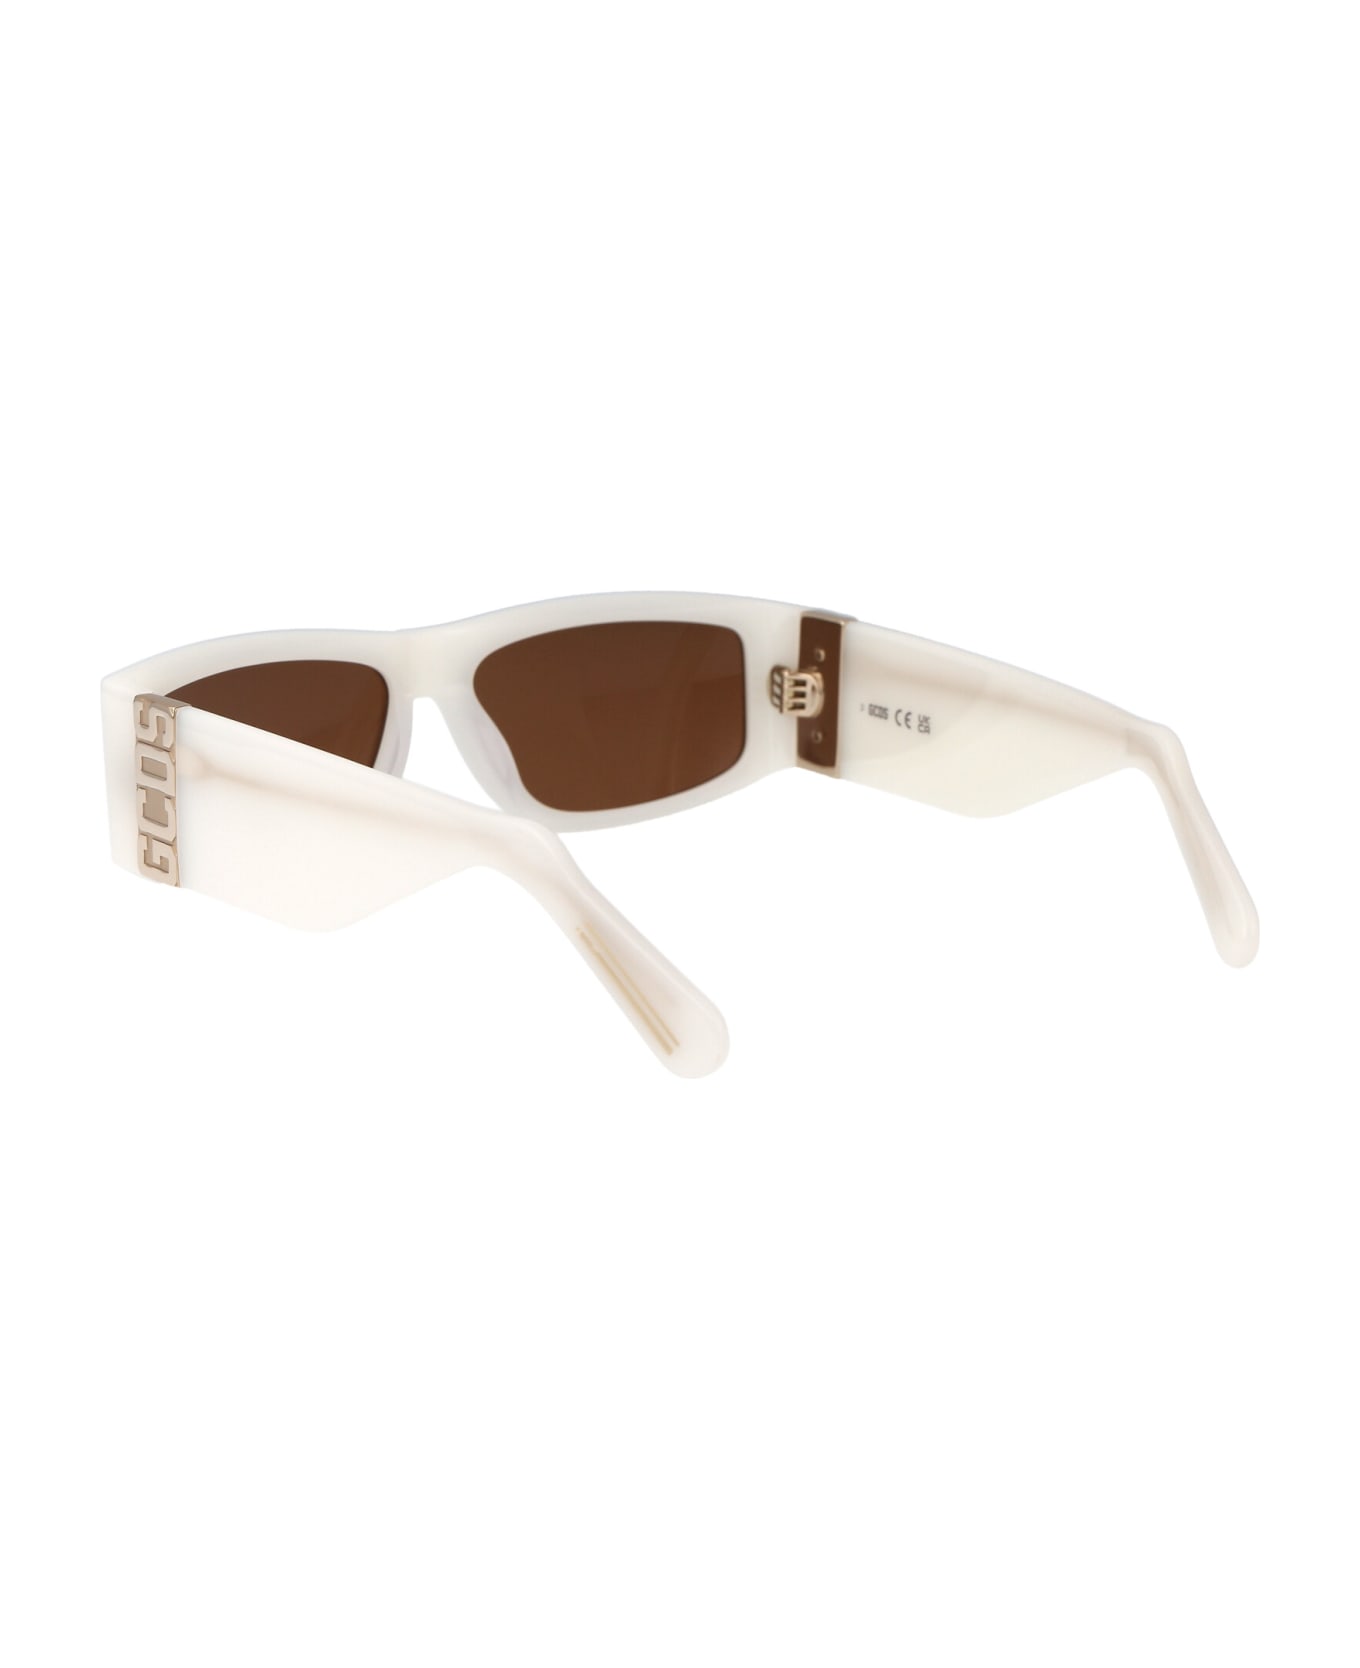 GCDS Gd0037 Sunglasses - 21E Bianco/Marrone サングラス